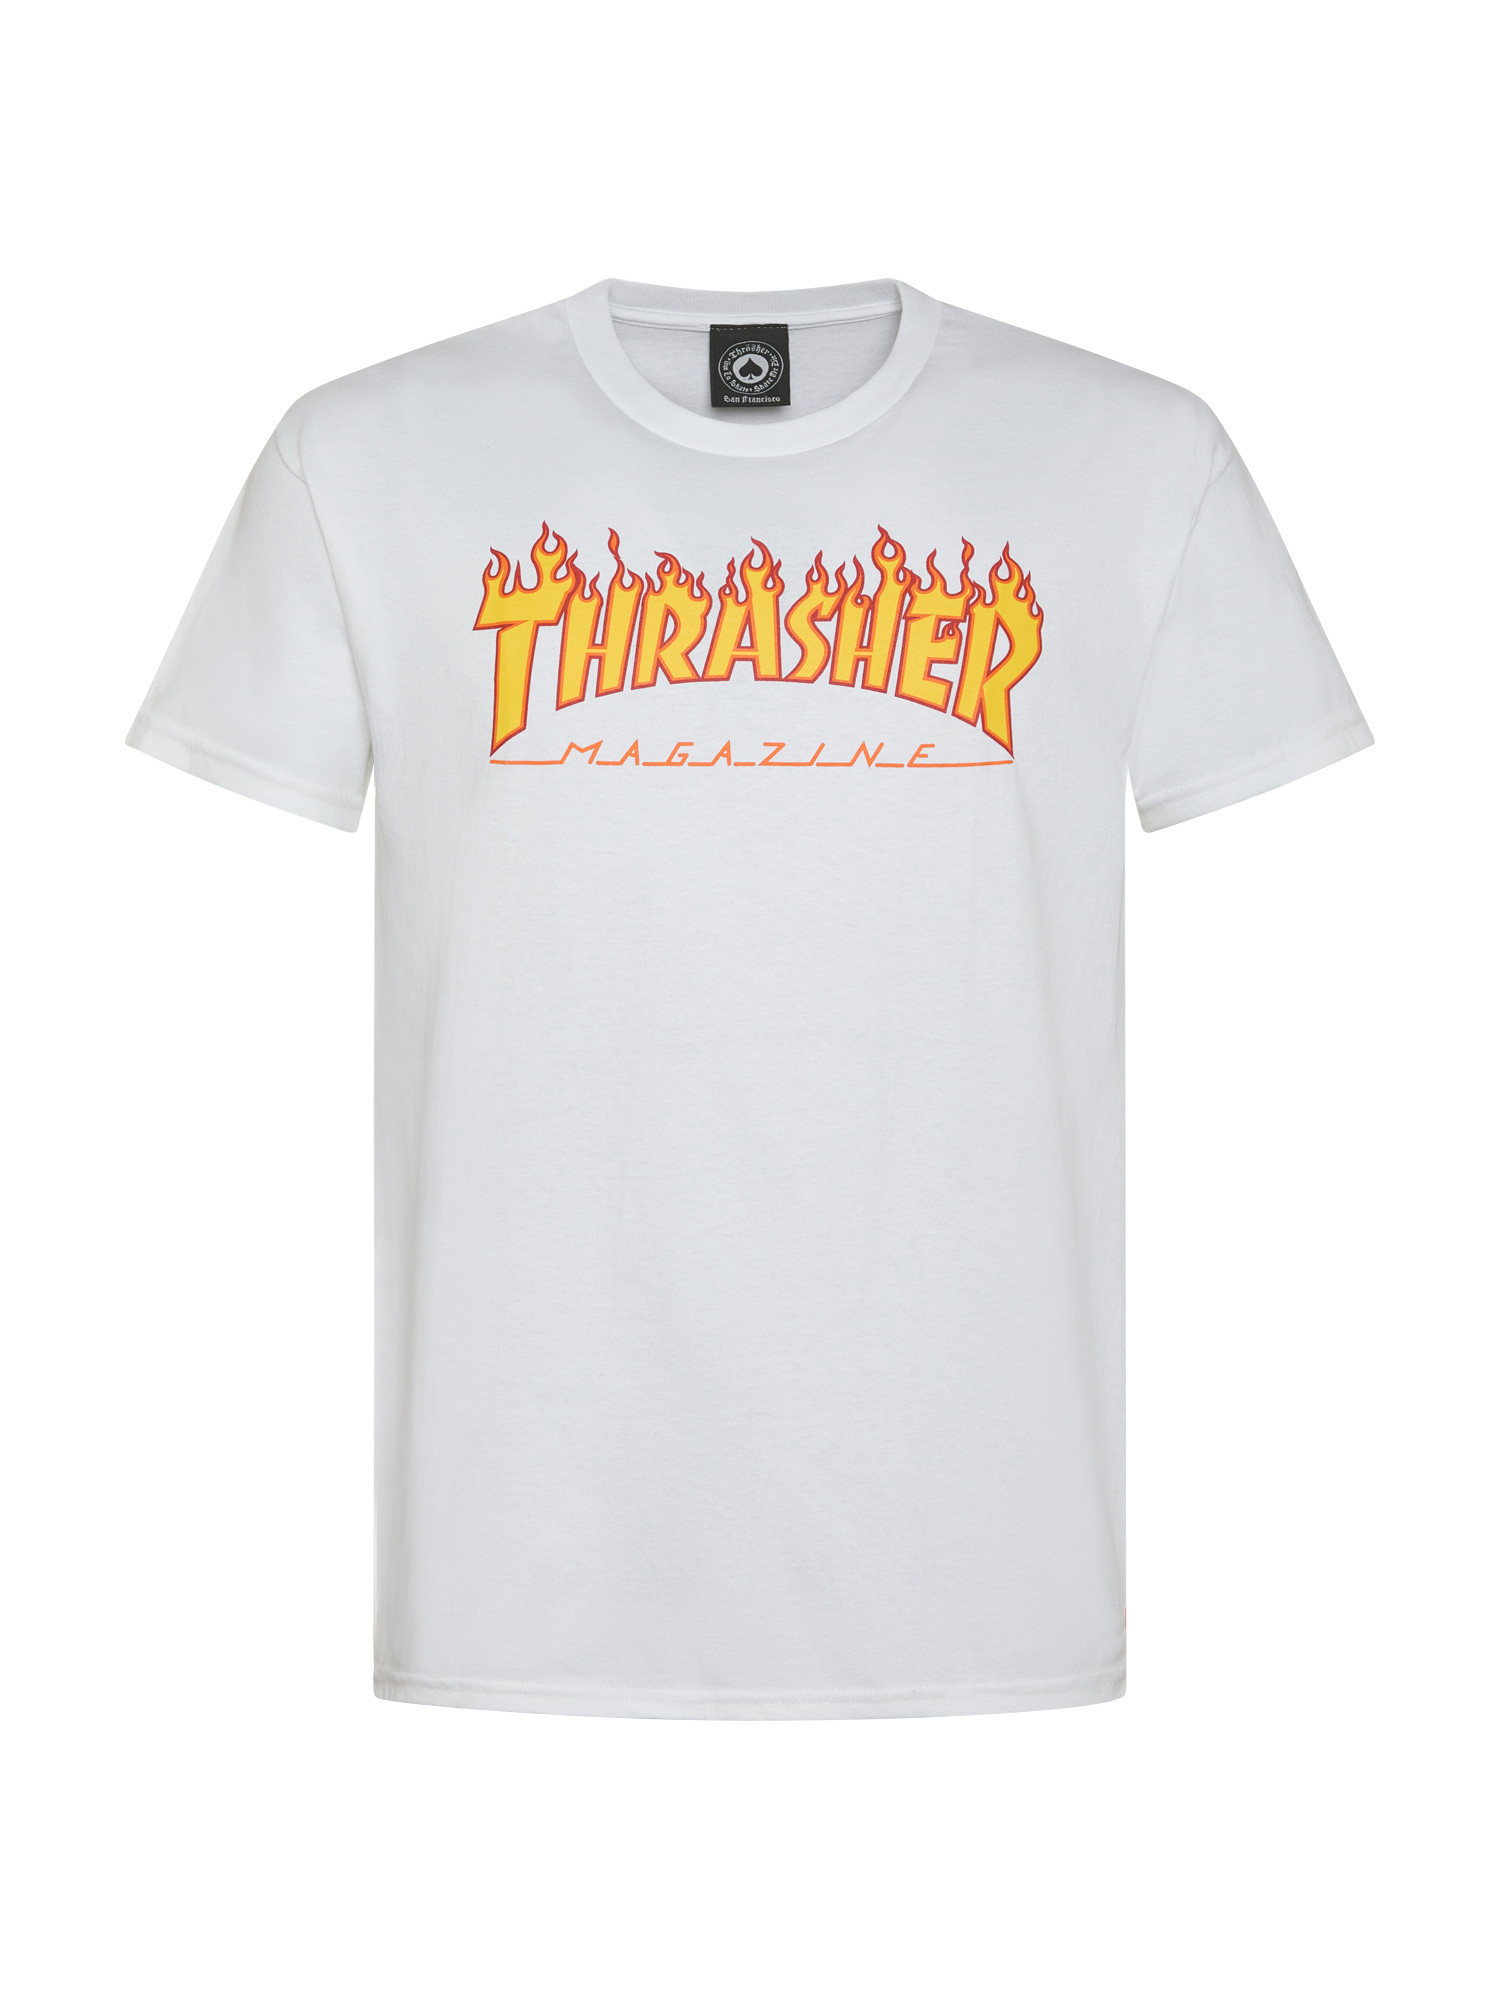 Thrasher - T-Shirt logo fiamme, Bianco, large image number 0